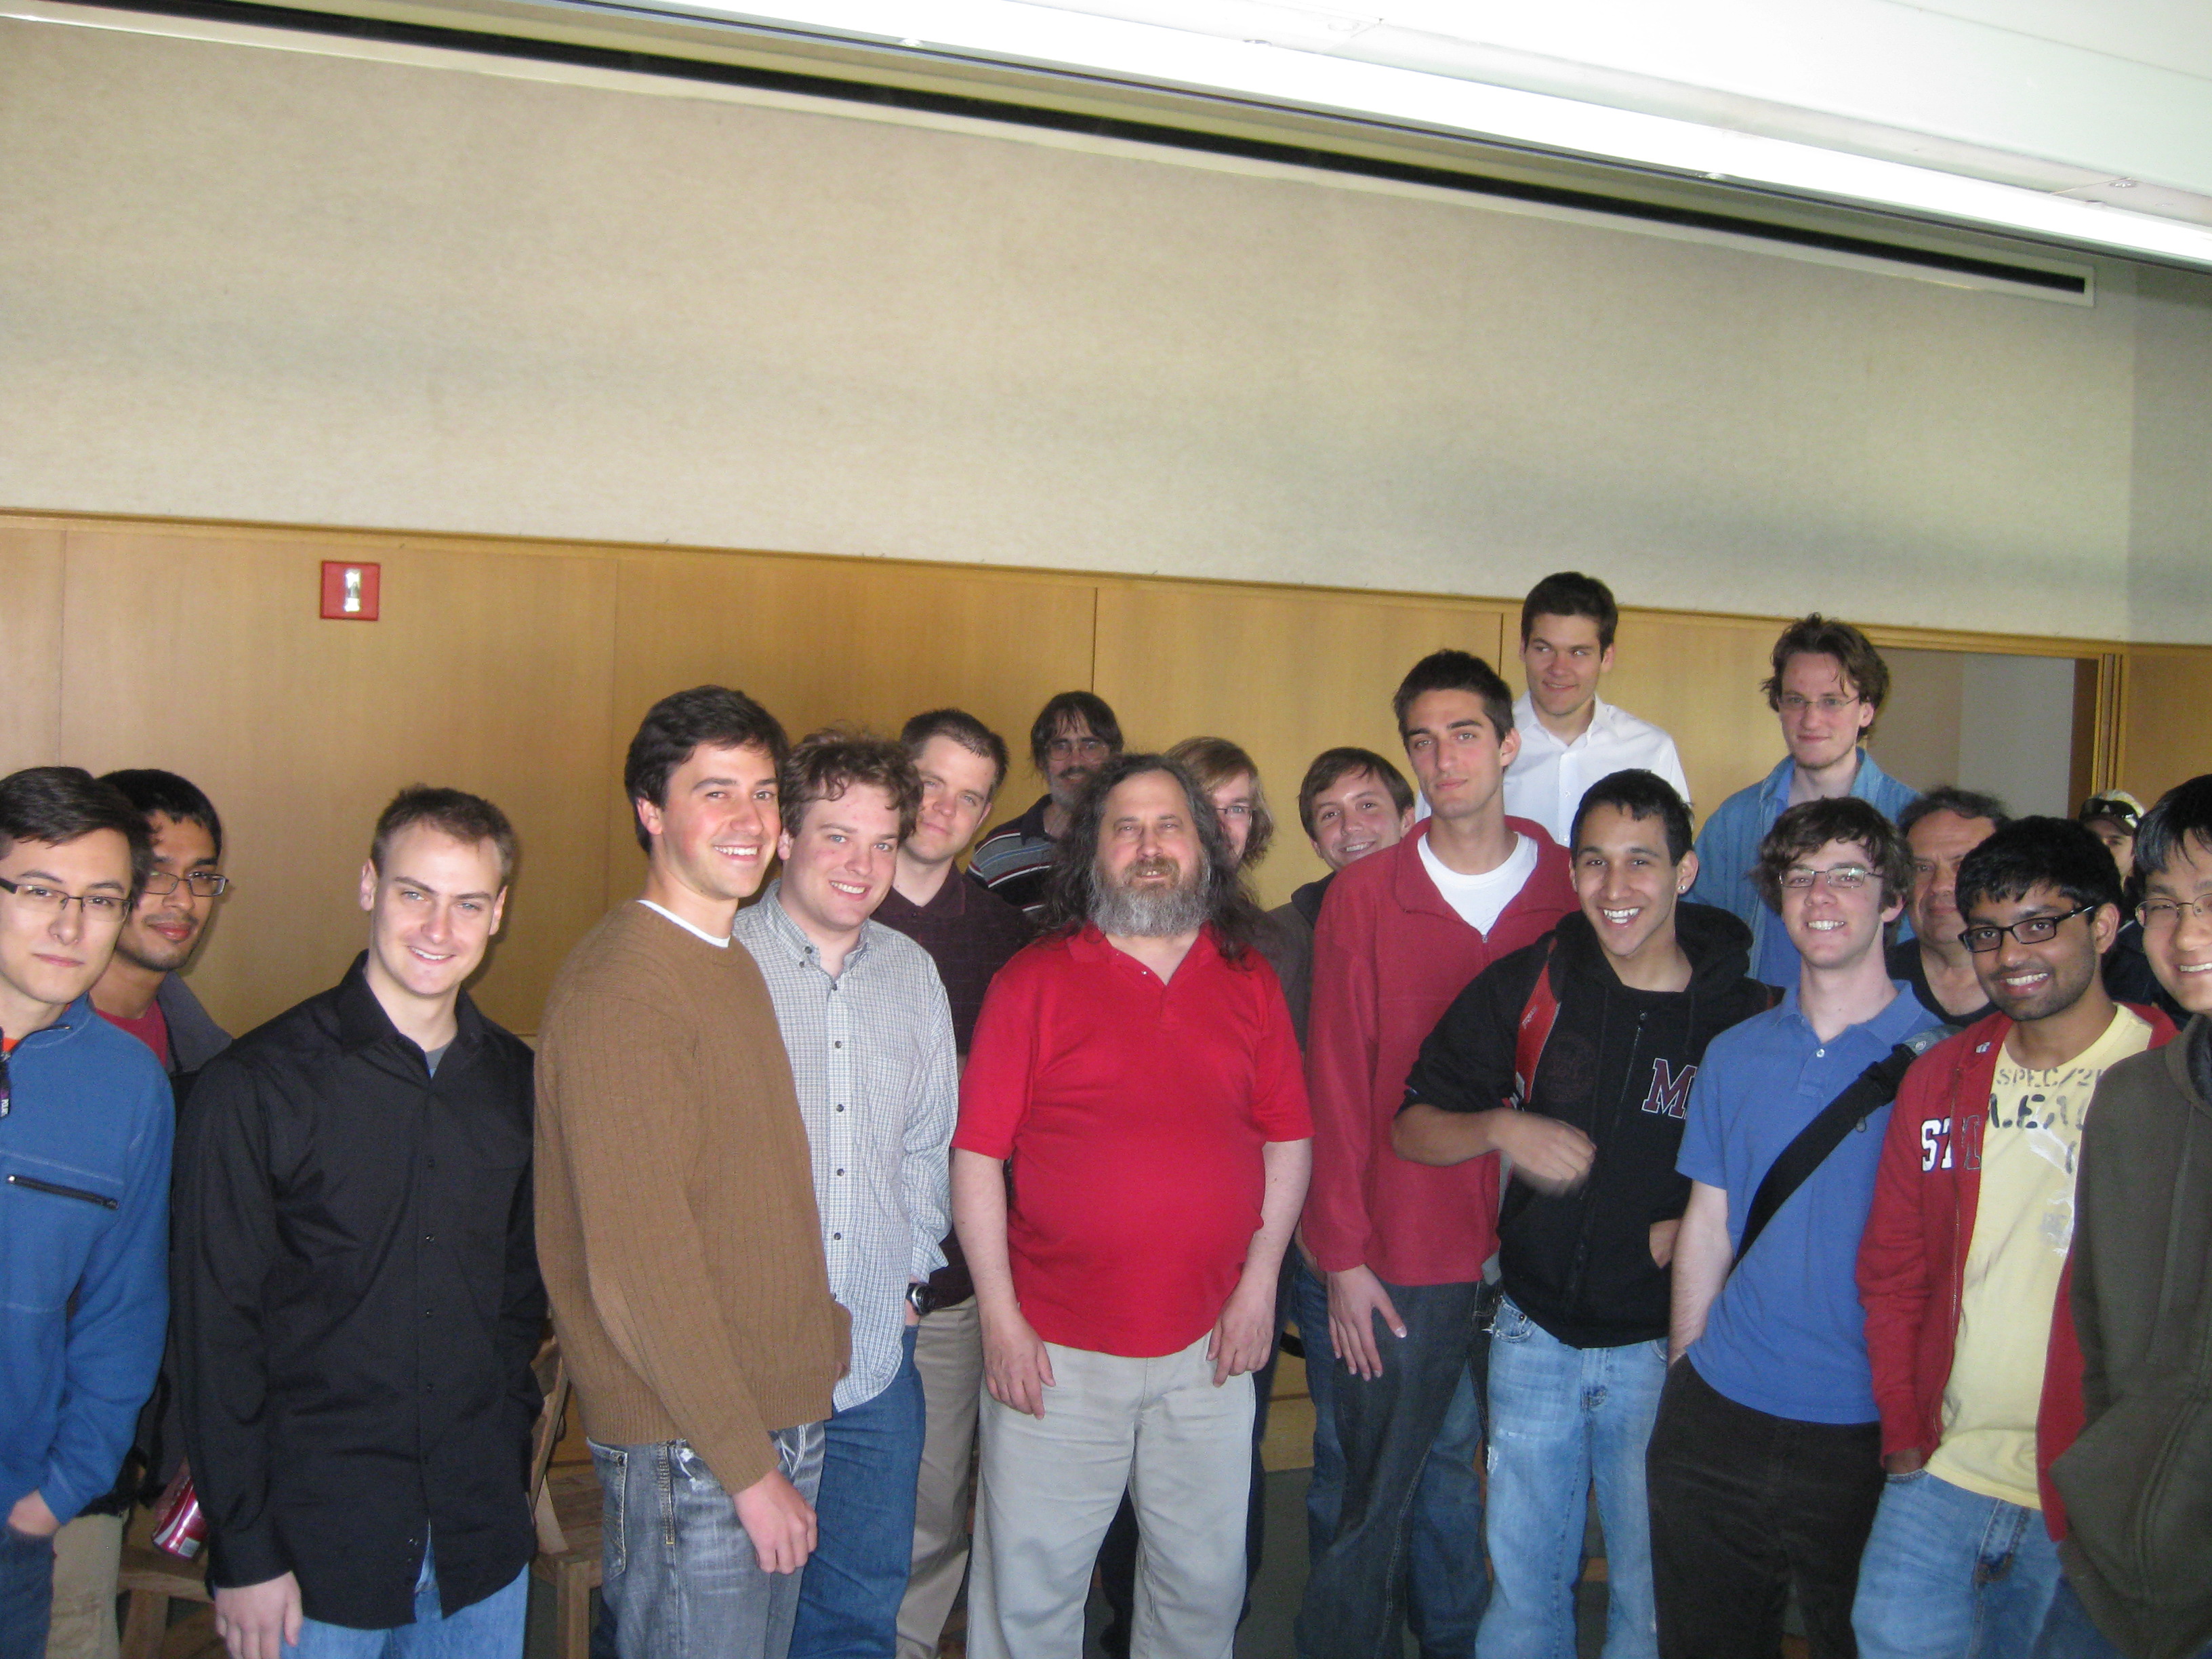 Richard Stallman at Stanford University